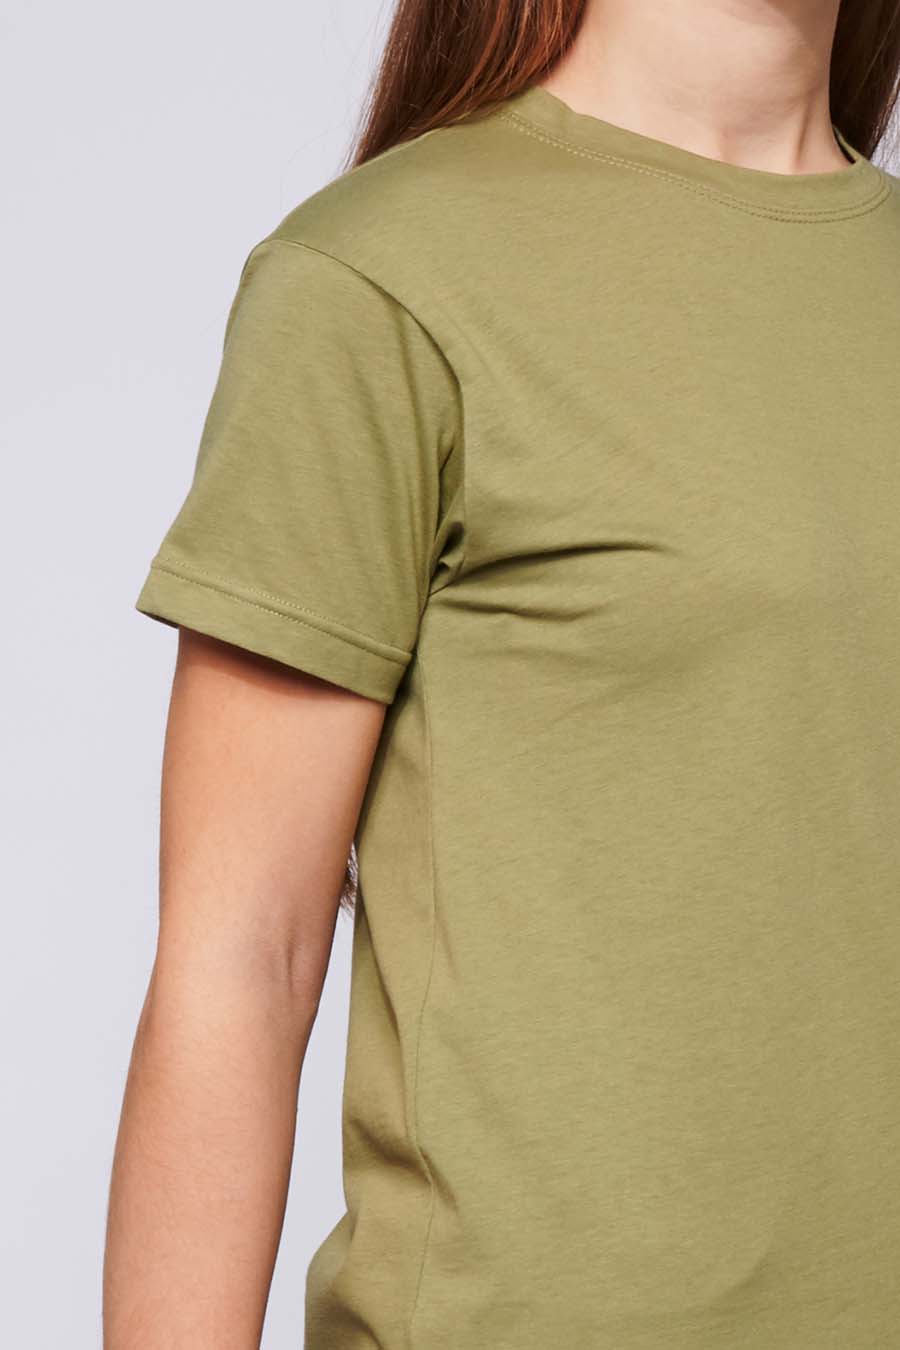 zoom tee-shirt Femme made in France en coton bio BRIGITTE kaki - FIL ROUGE